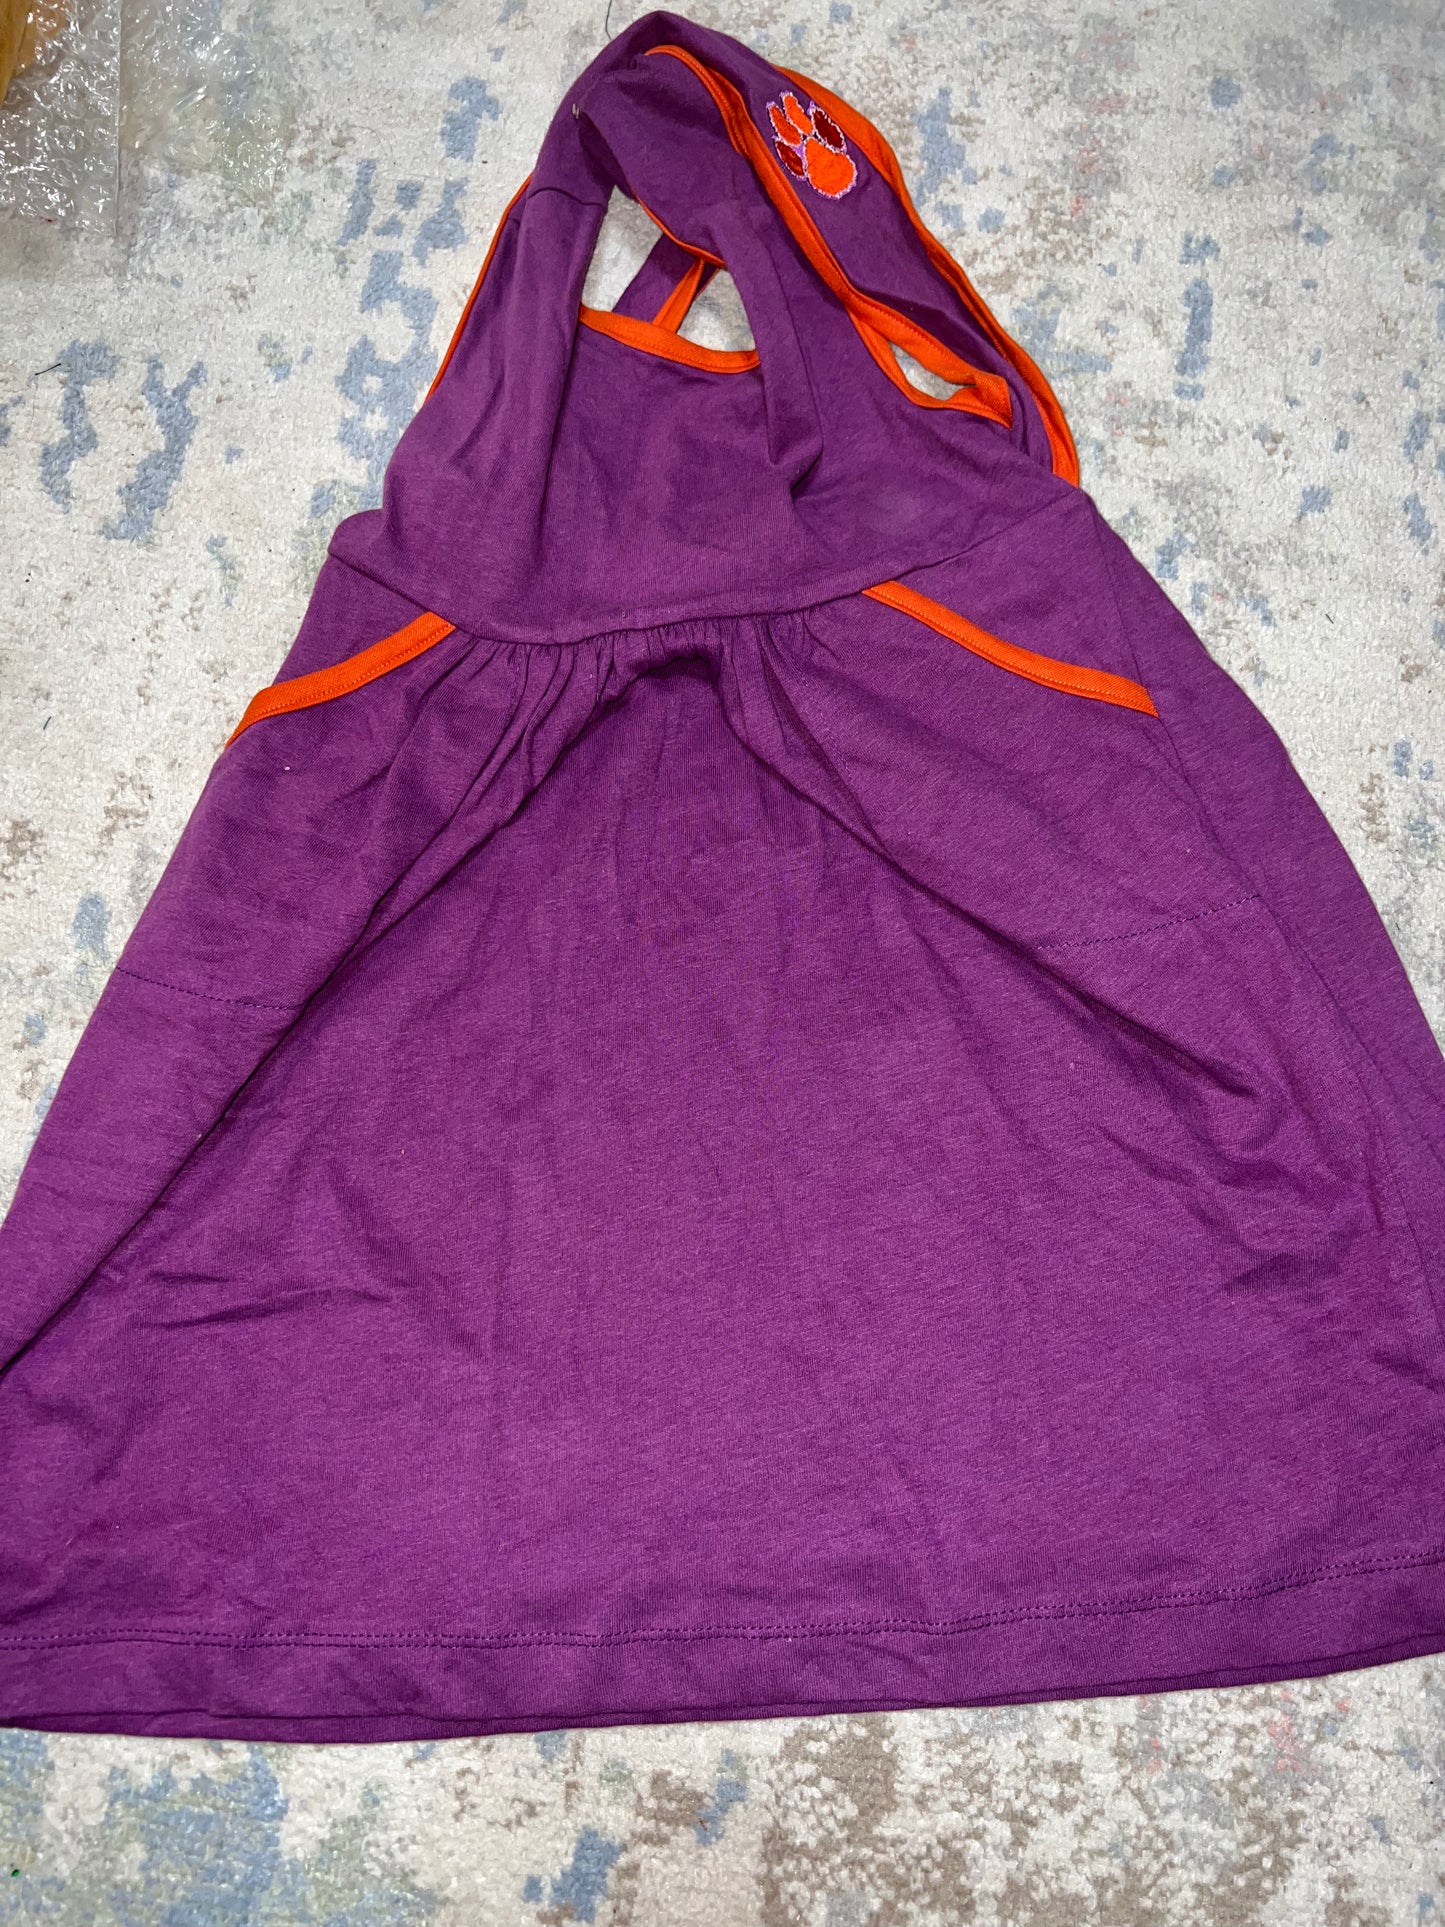 Rts-purple and orange dress